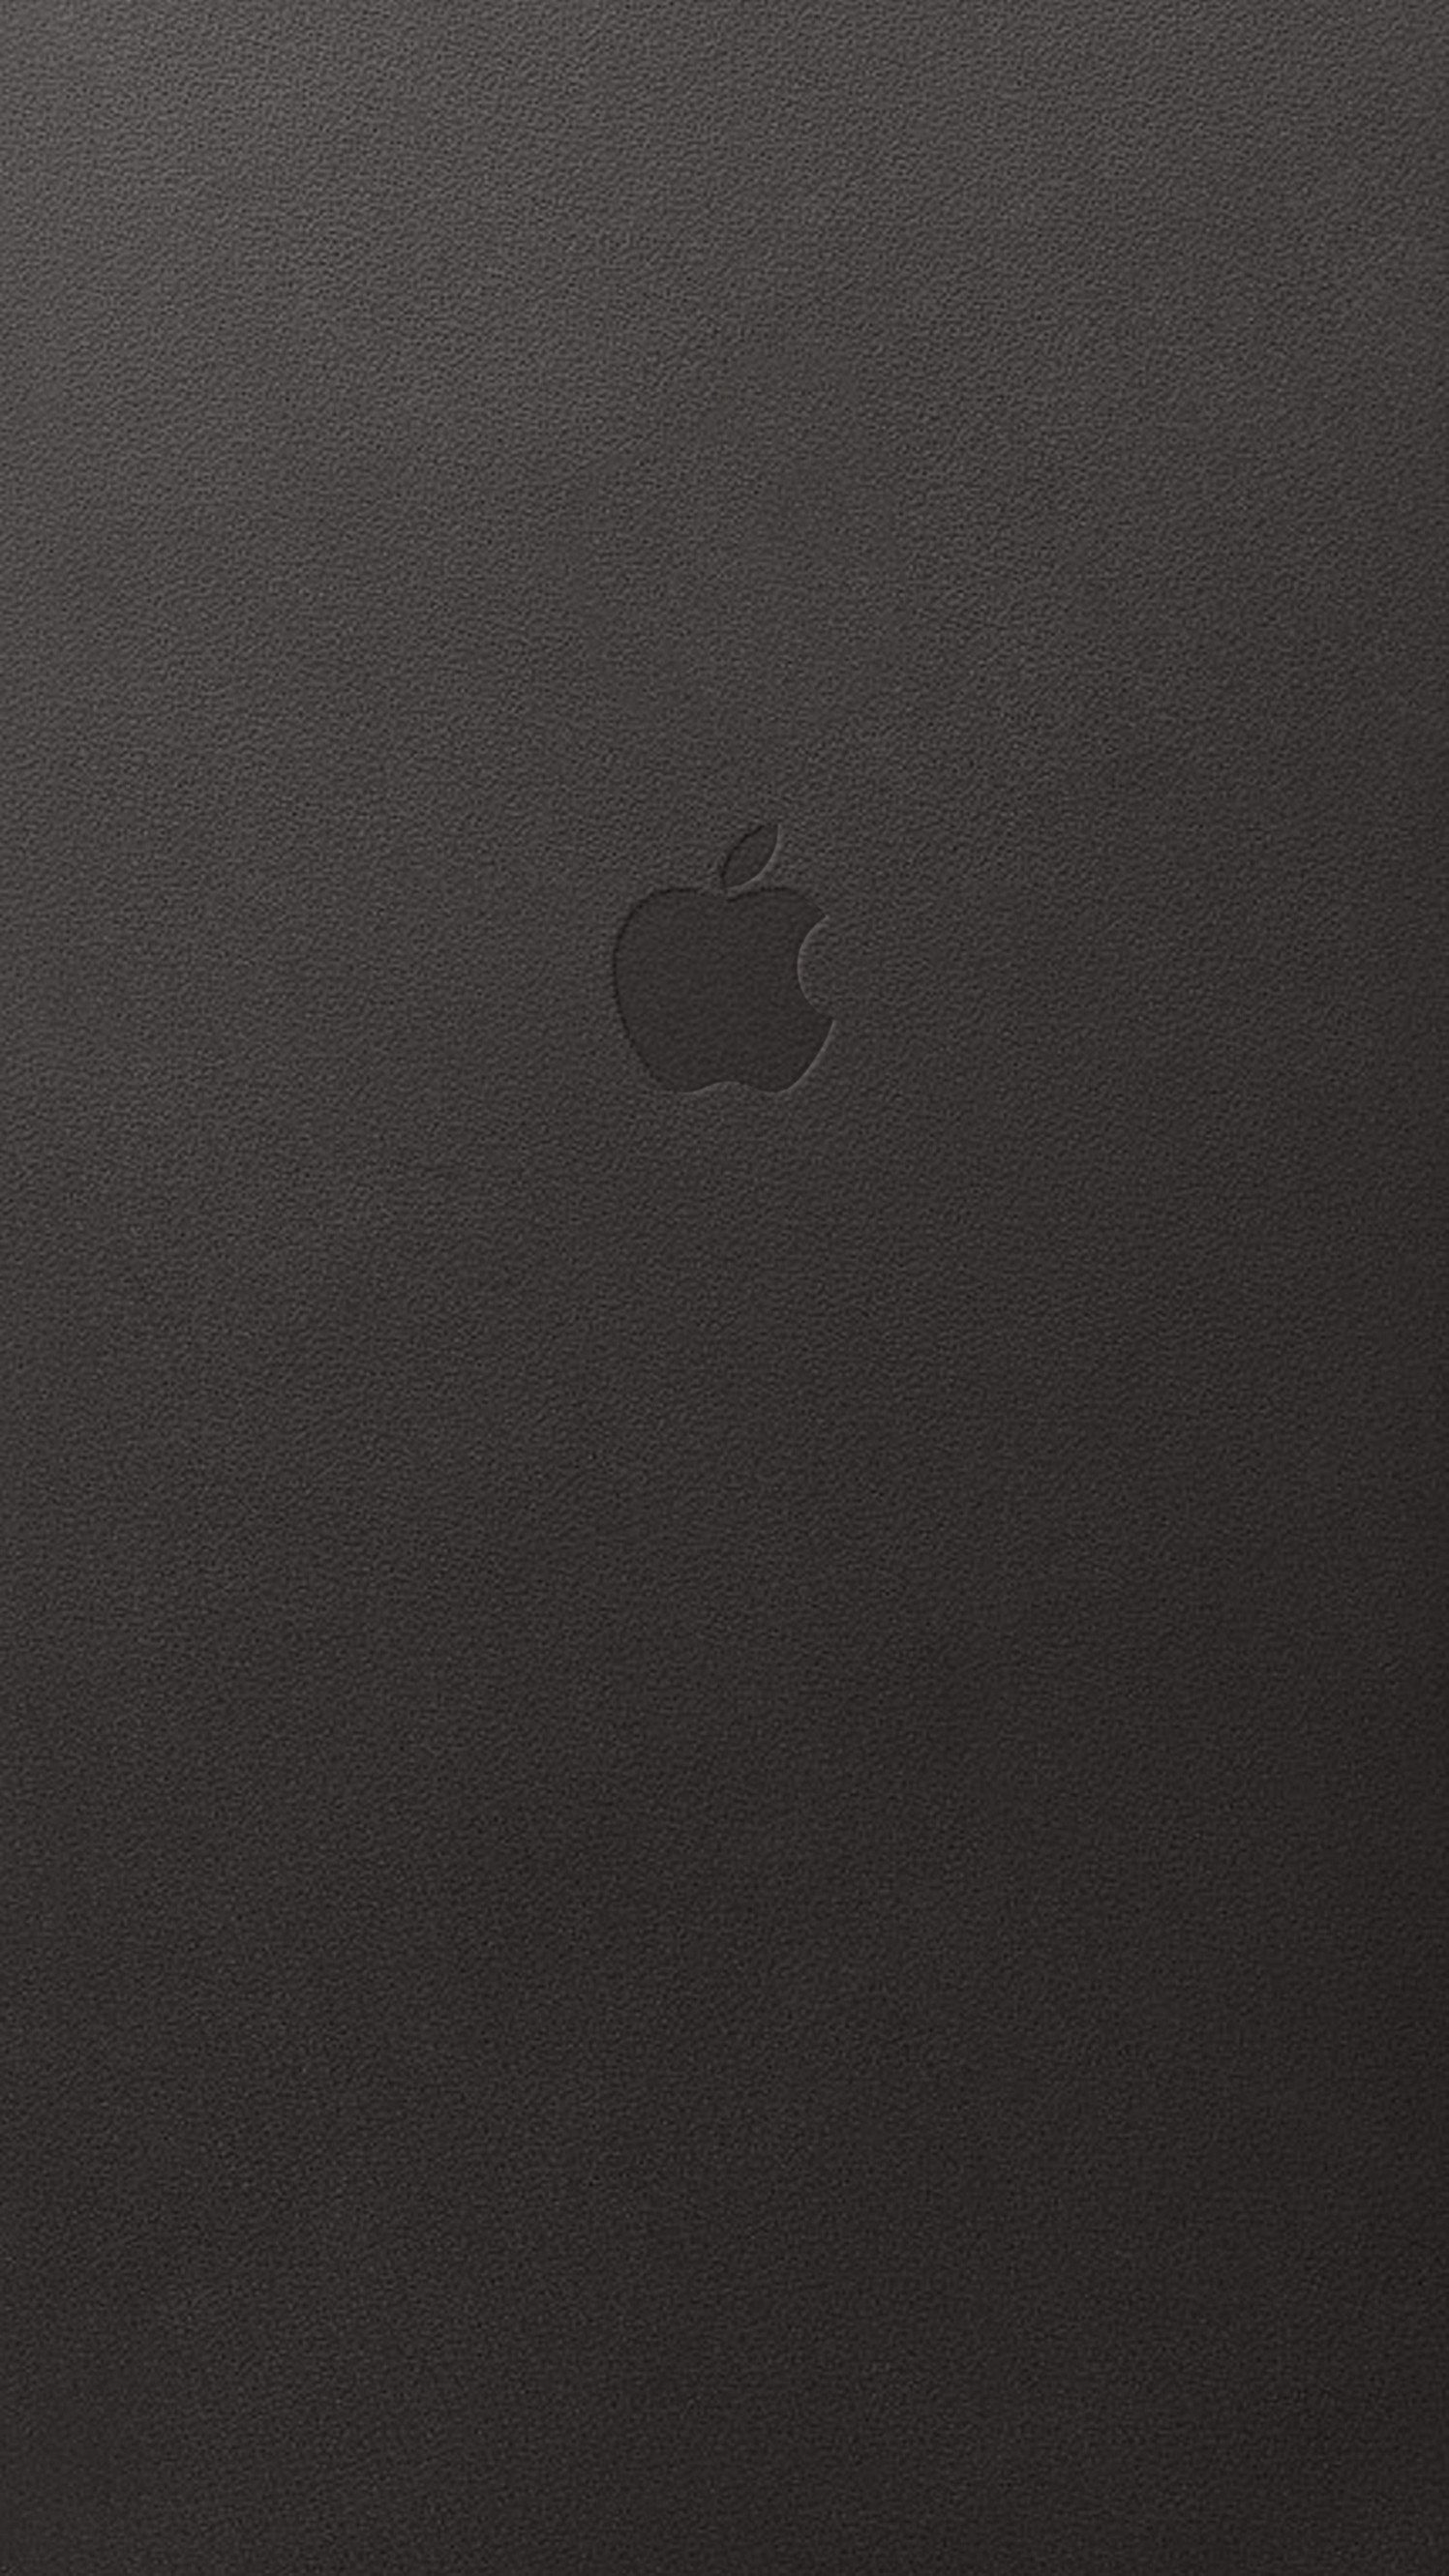 1497x2662 Apple Leather Case wallpaper. Black By JasonZigrino